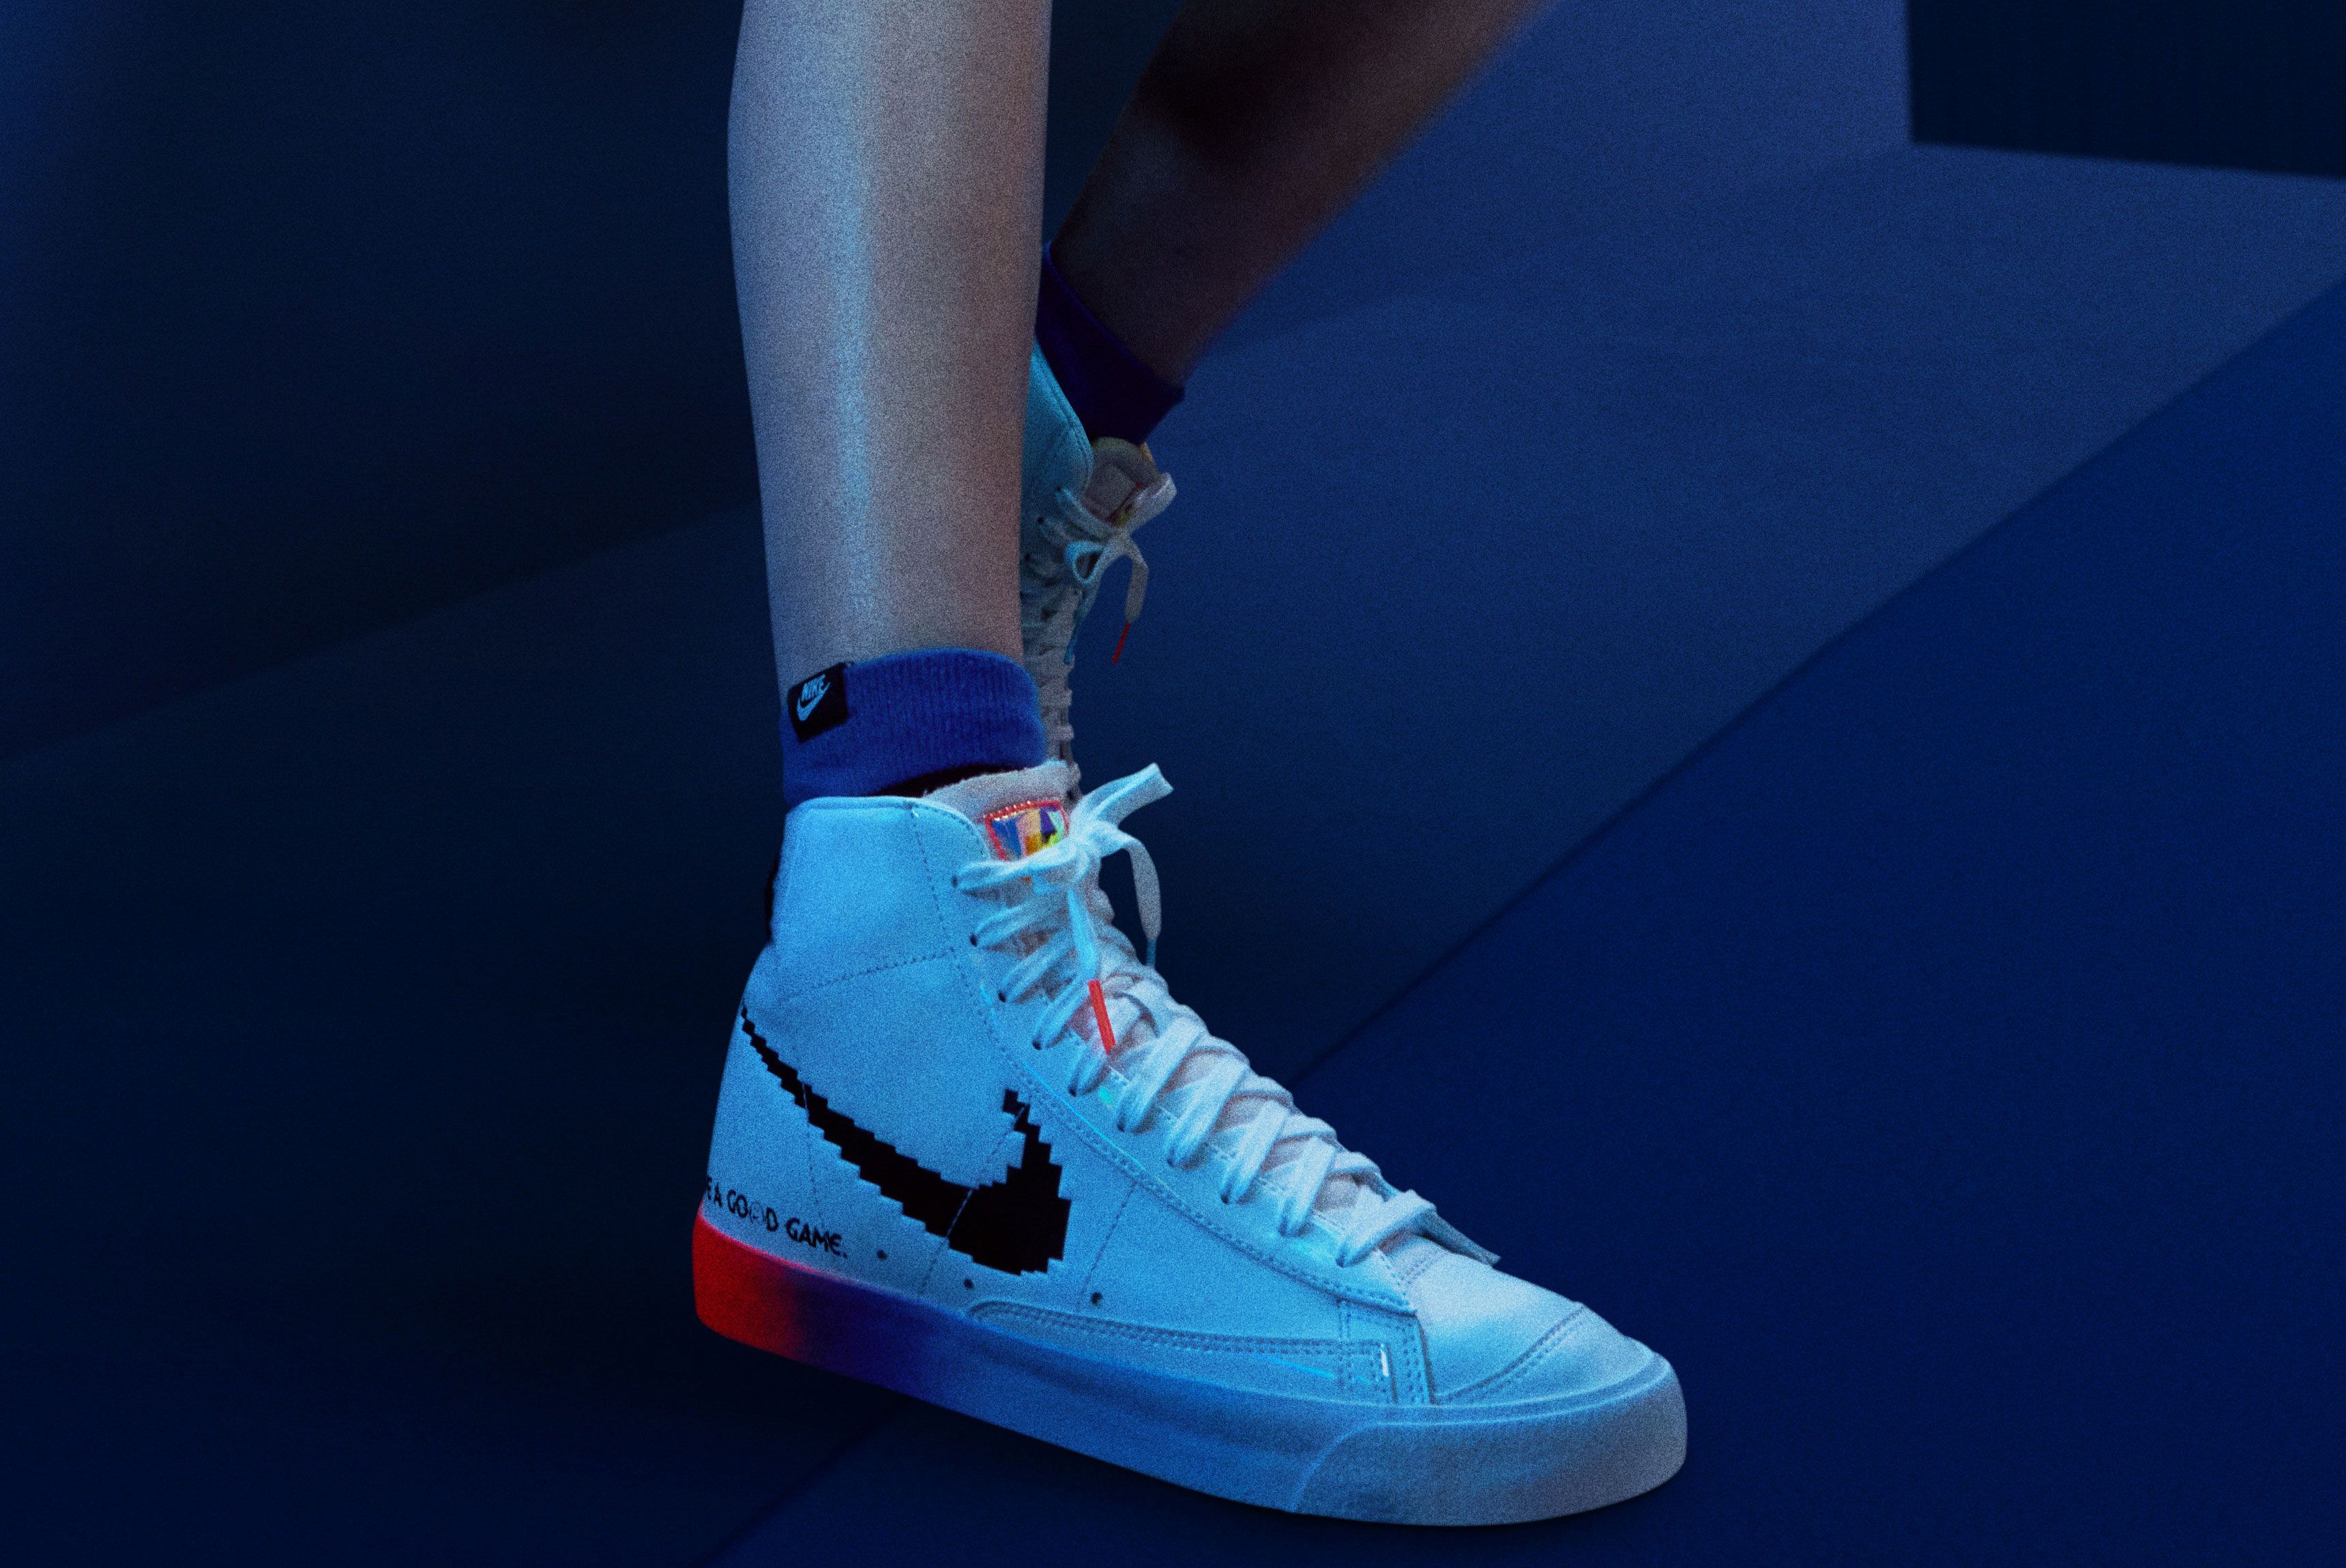 Nike Blazer 'Have a Good Game'